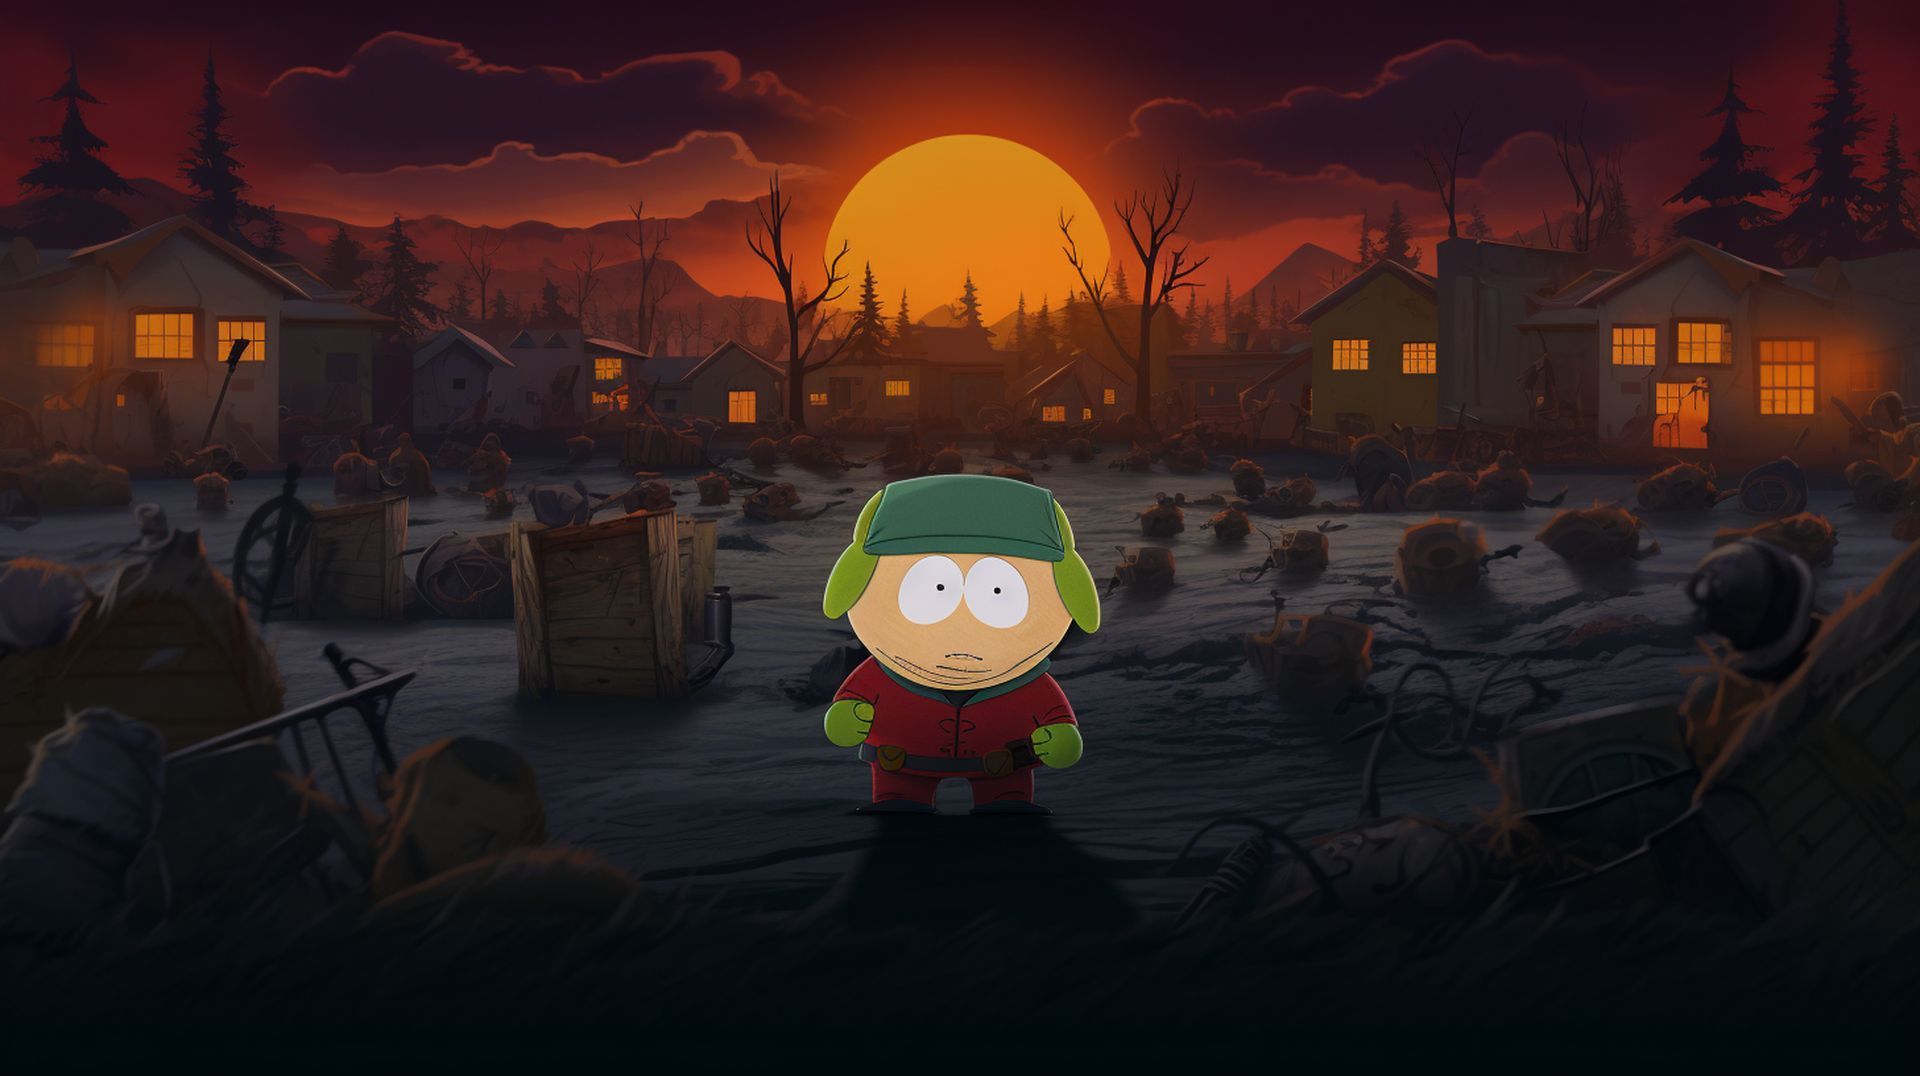 Showrunner AI demos South Park episode creator